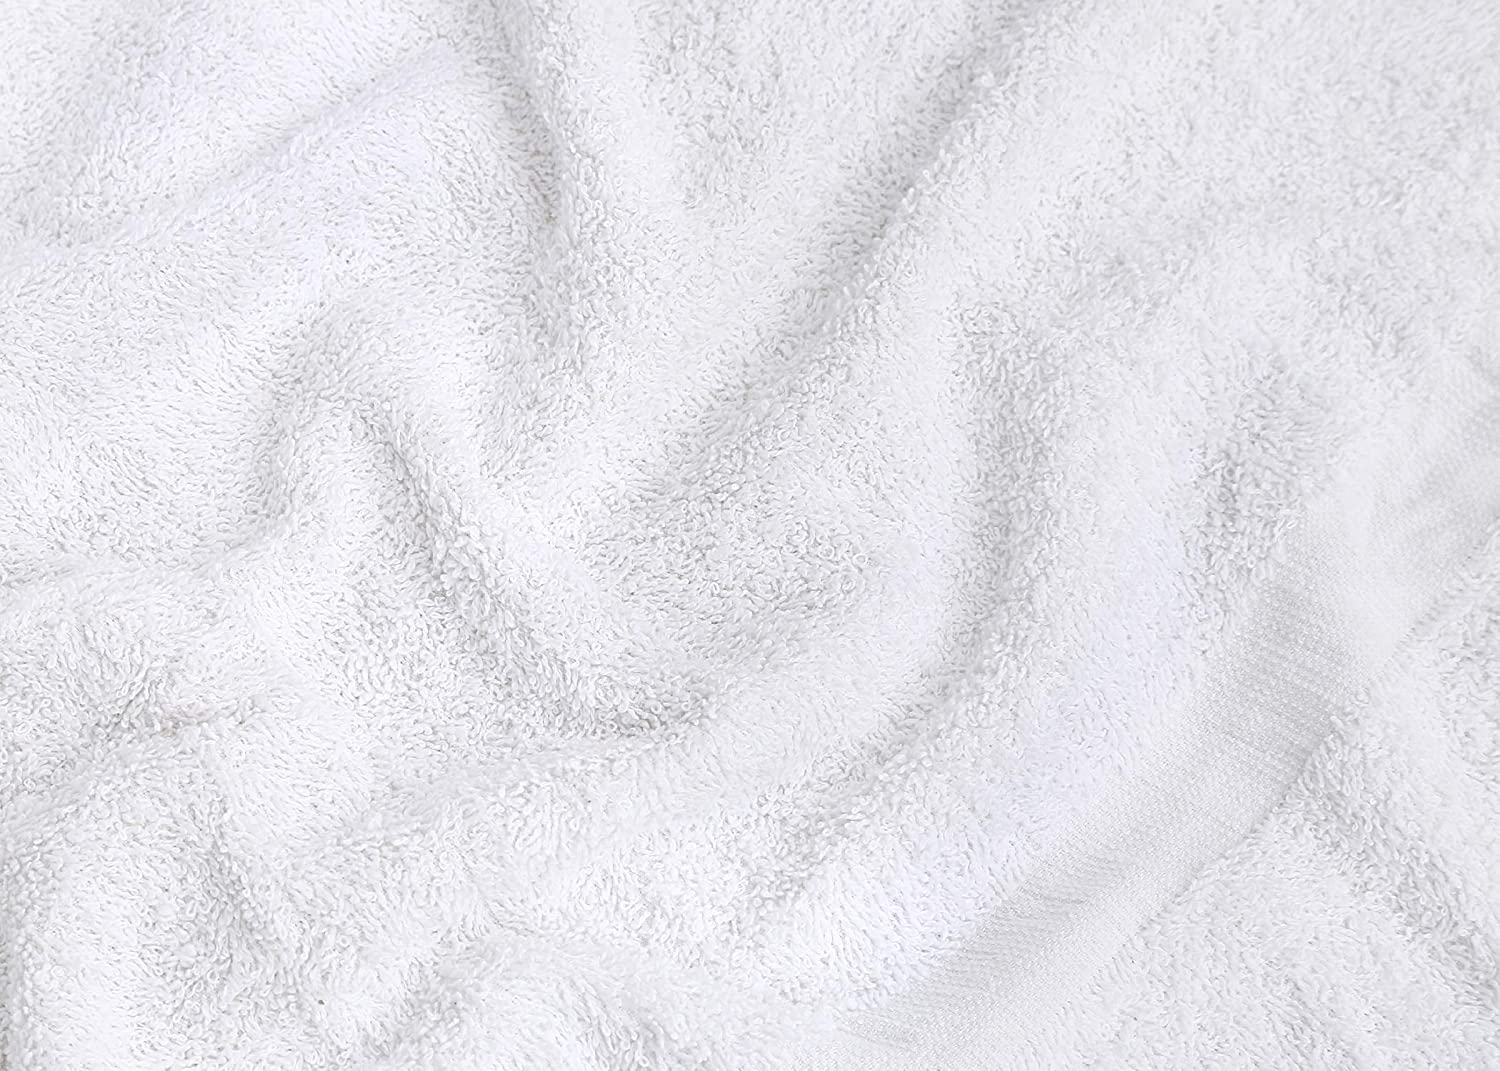 Quba Linen 100% Cotton Wash Cloths 12 Pack Bath Washcloth Facecloths, 12x12  Inches Large Bathroom Wash Cloth - Extra-Absorbent | Fingertip Towel 